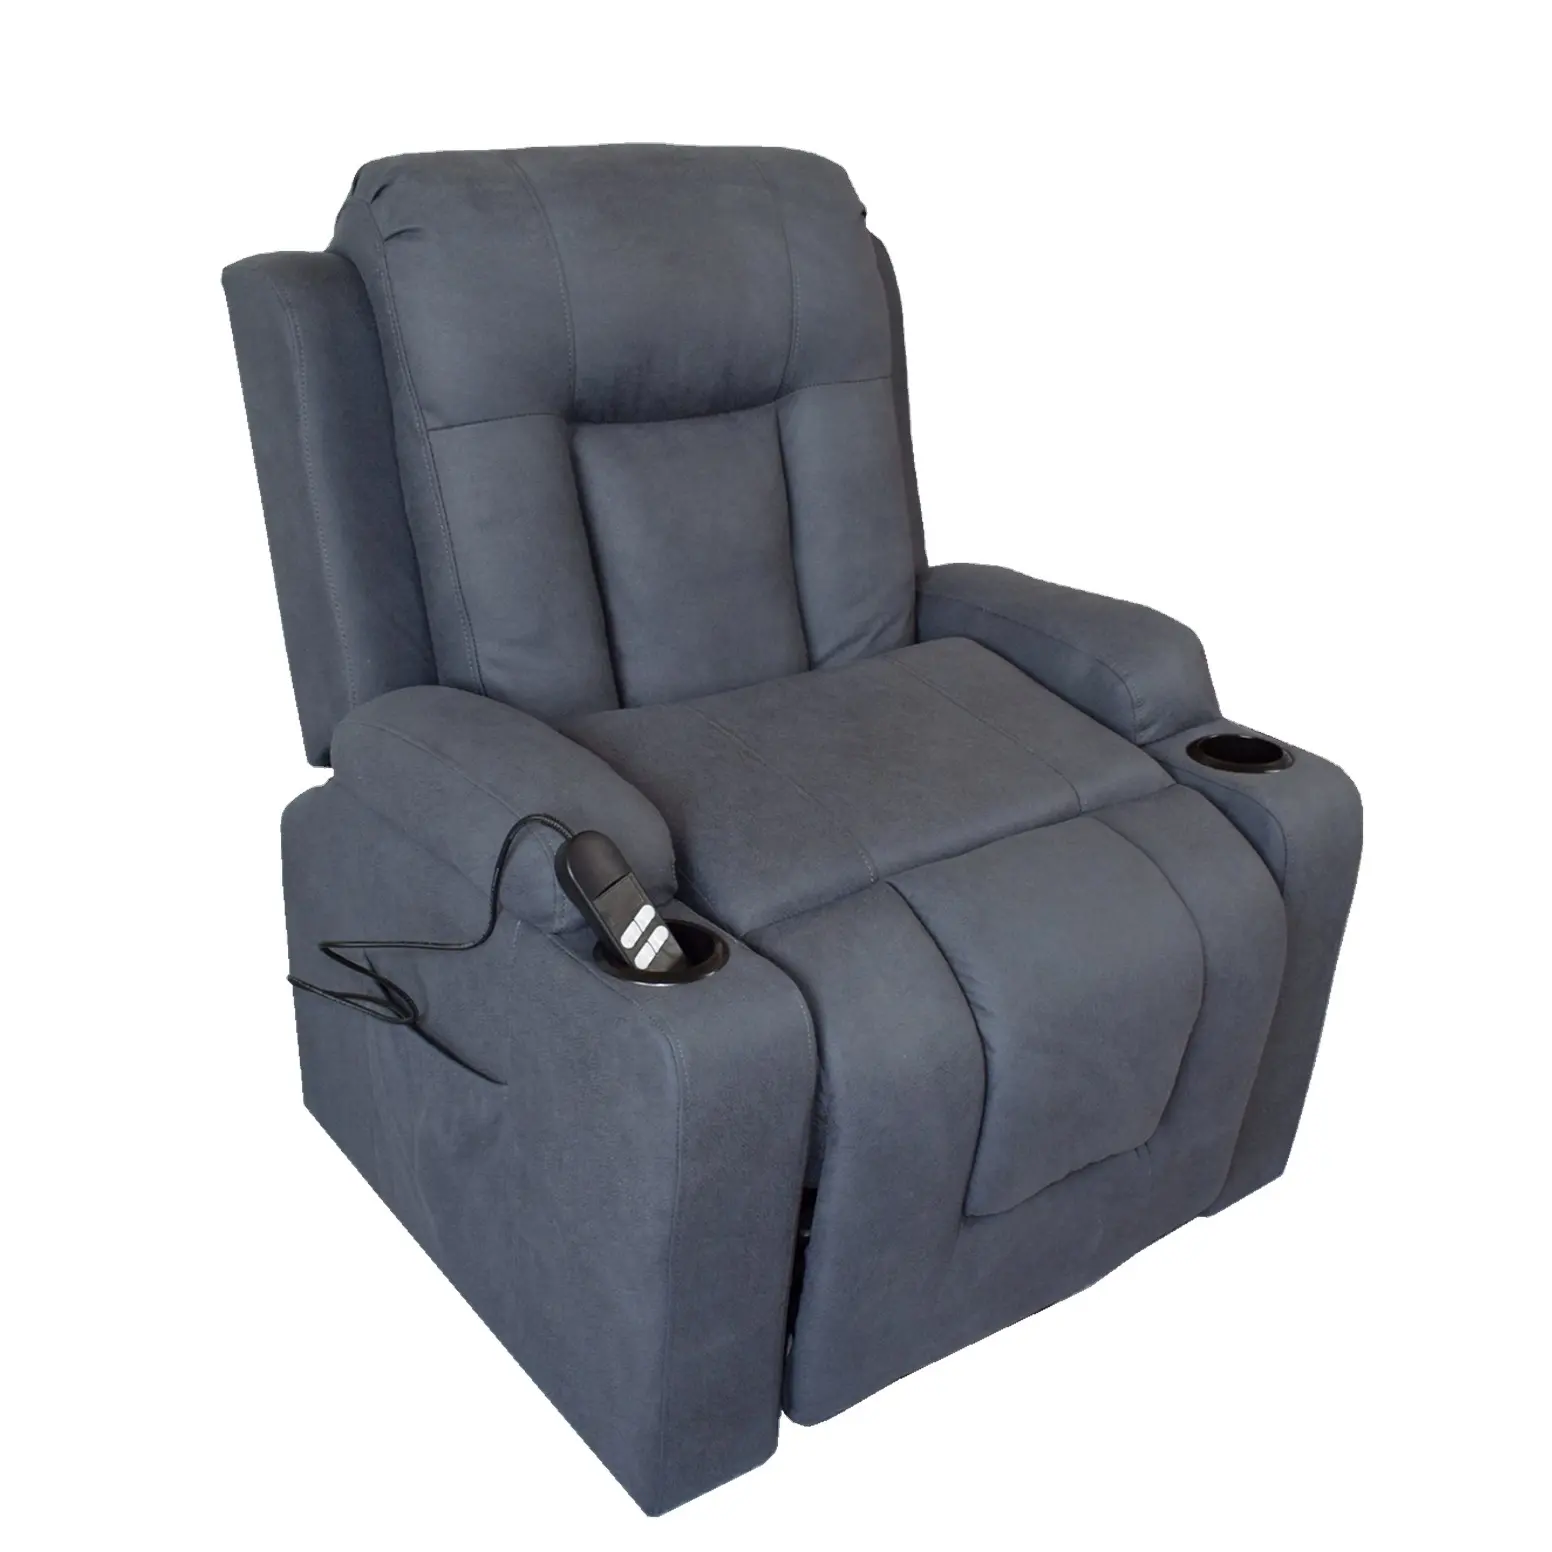 JKY 가구 ZOY 4 positional Ultimate Lift Seat recliner Chair 시장에 세계 최신의 가장 혁신적인 실용적인 안락 의자